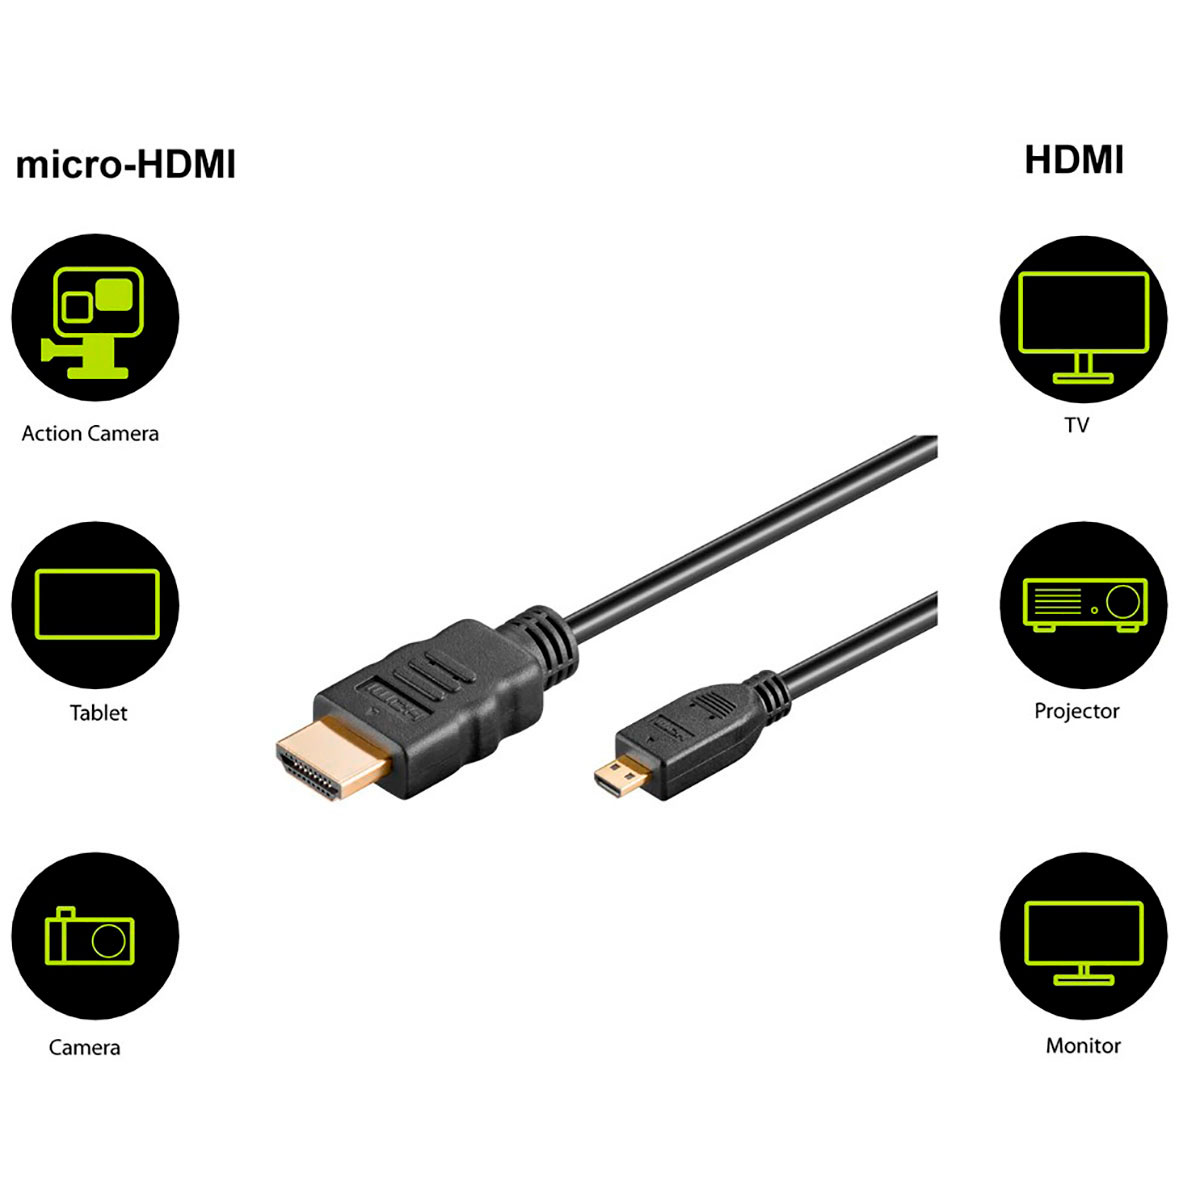 konsol Spytte ud veteran Micro HDMI kabel 4K - 3m (Goobay) - Køb online her